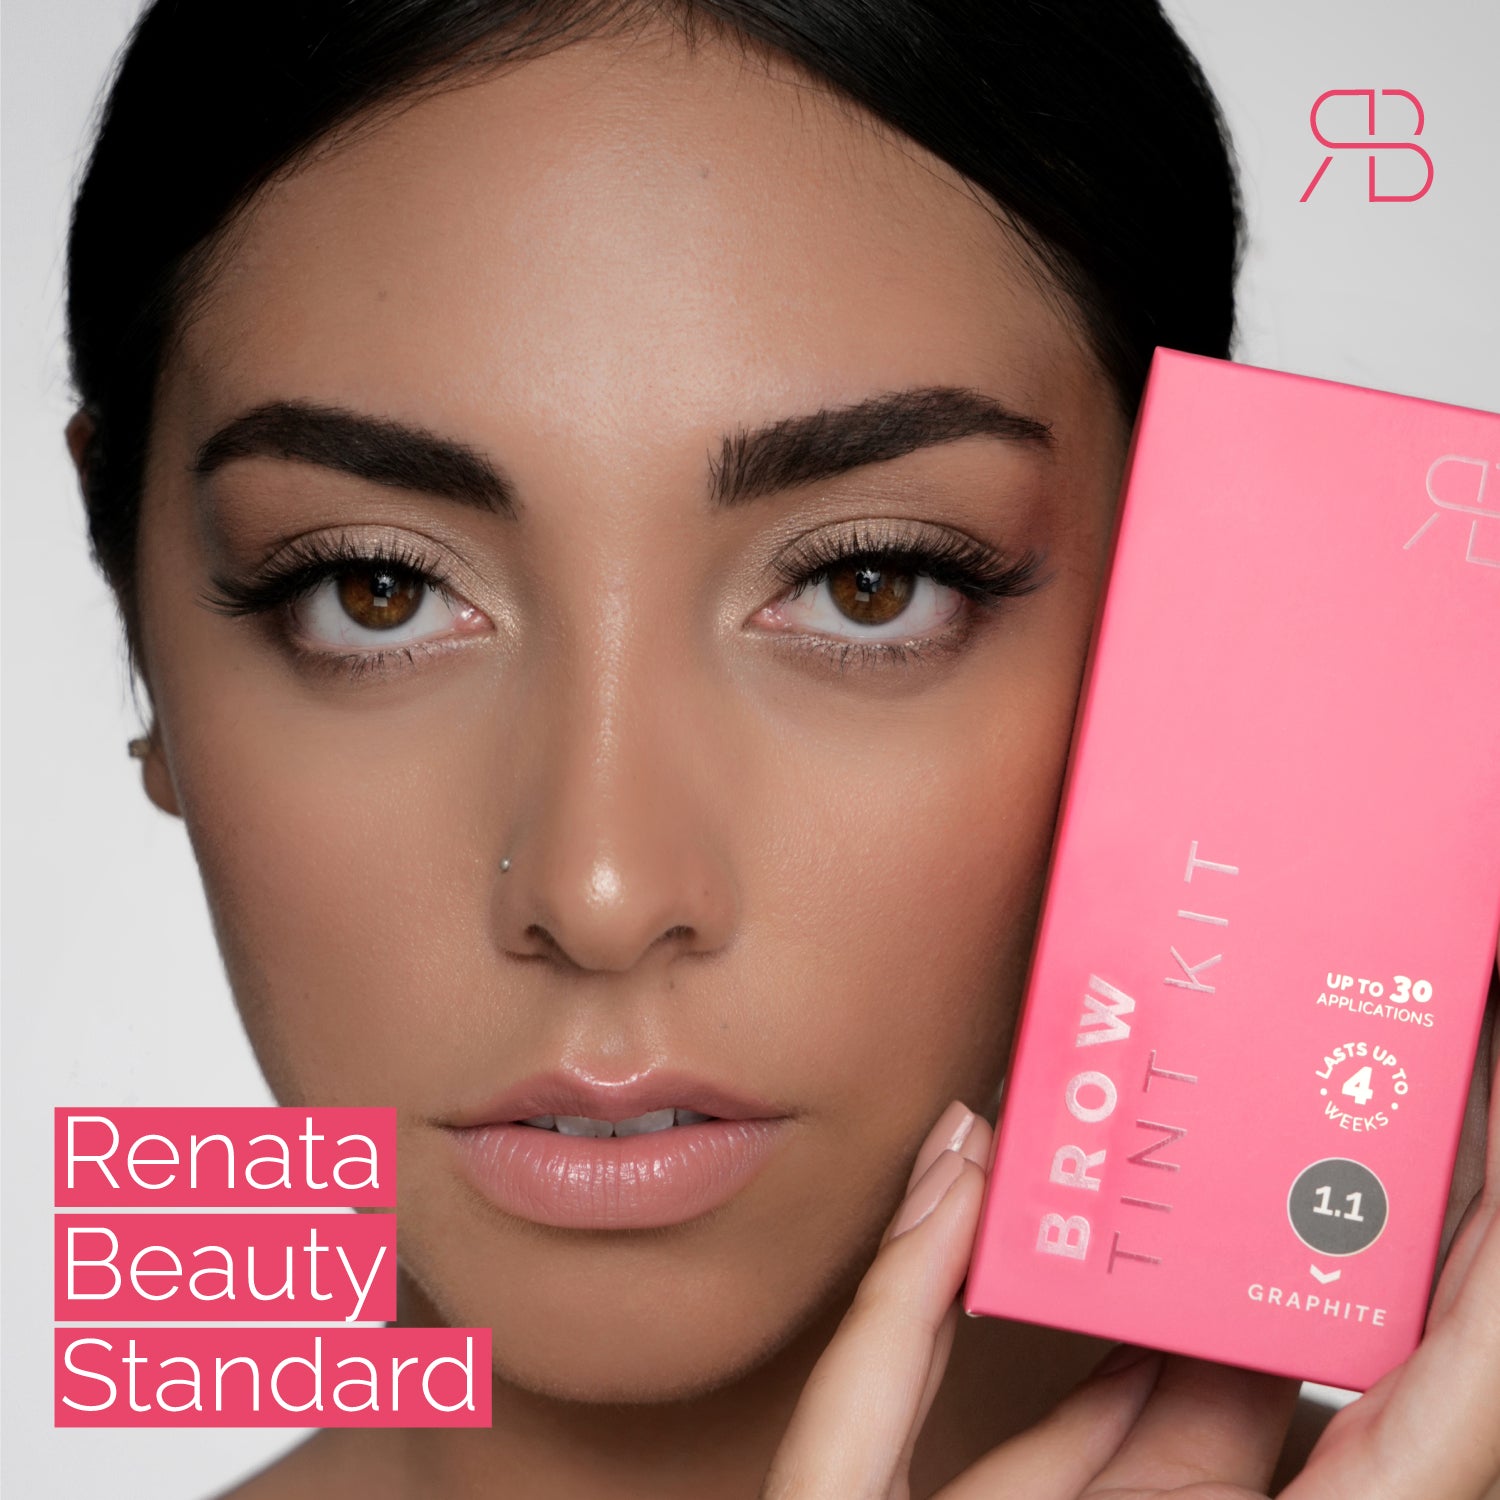 Renata Beauty Lash and Brow Tint Kit – Eyelash & Eyebrow Tint Set – Dye Kit with Color Tint, Cream Developer and Styling Brush – Long-Lasting Effect